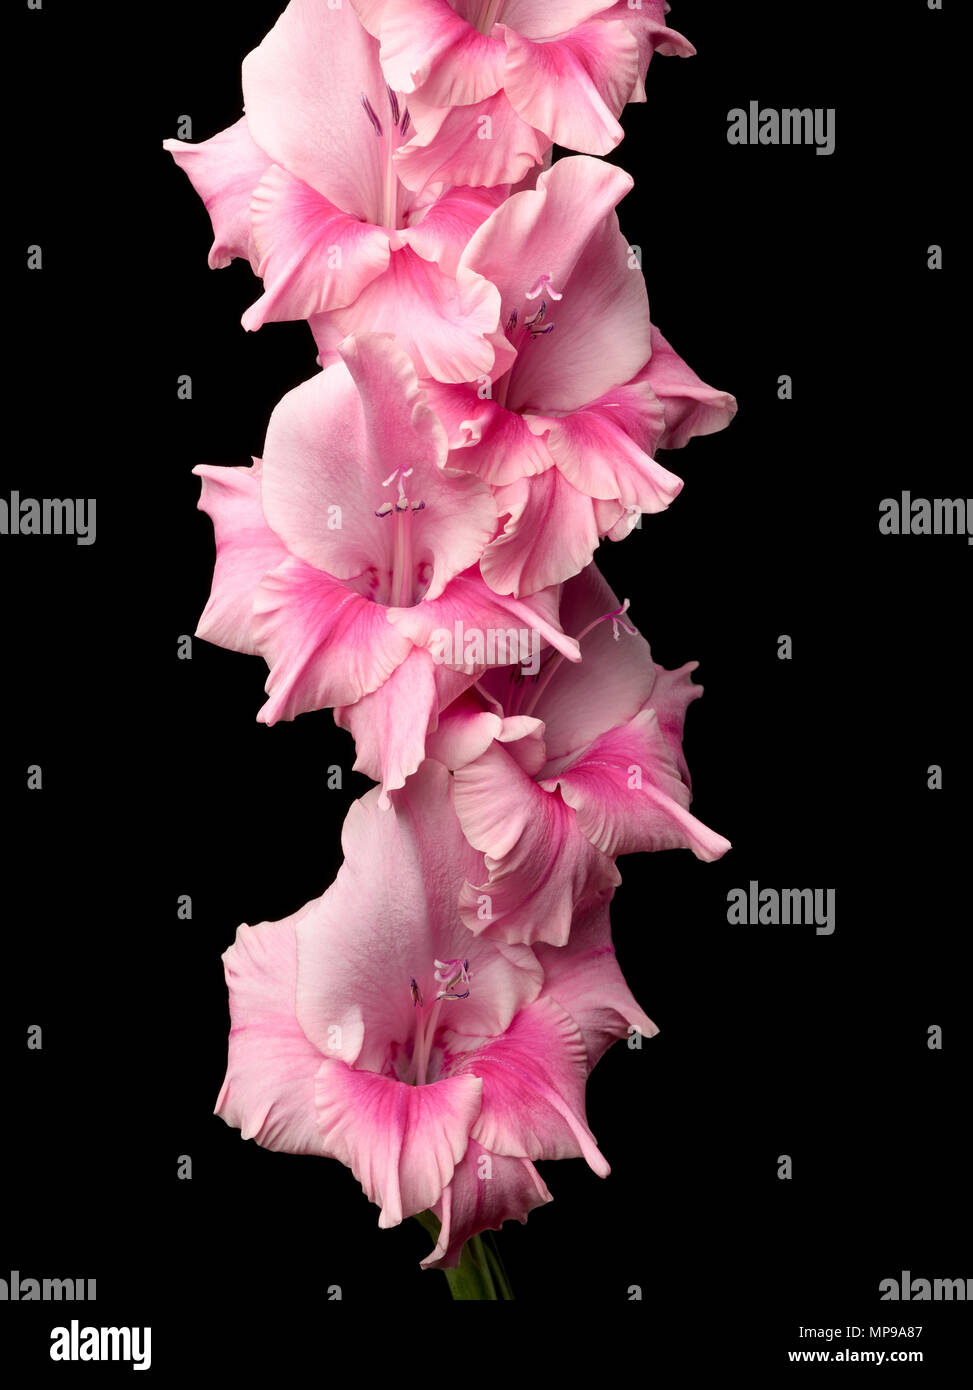 Studio image of Gladiolus stemm in full flower, black background. Stock Photo